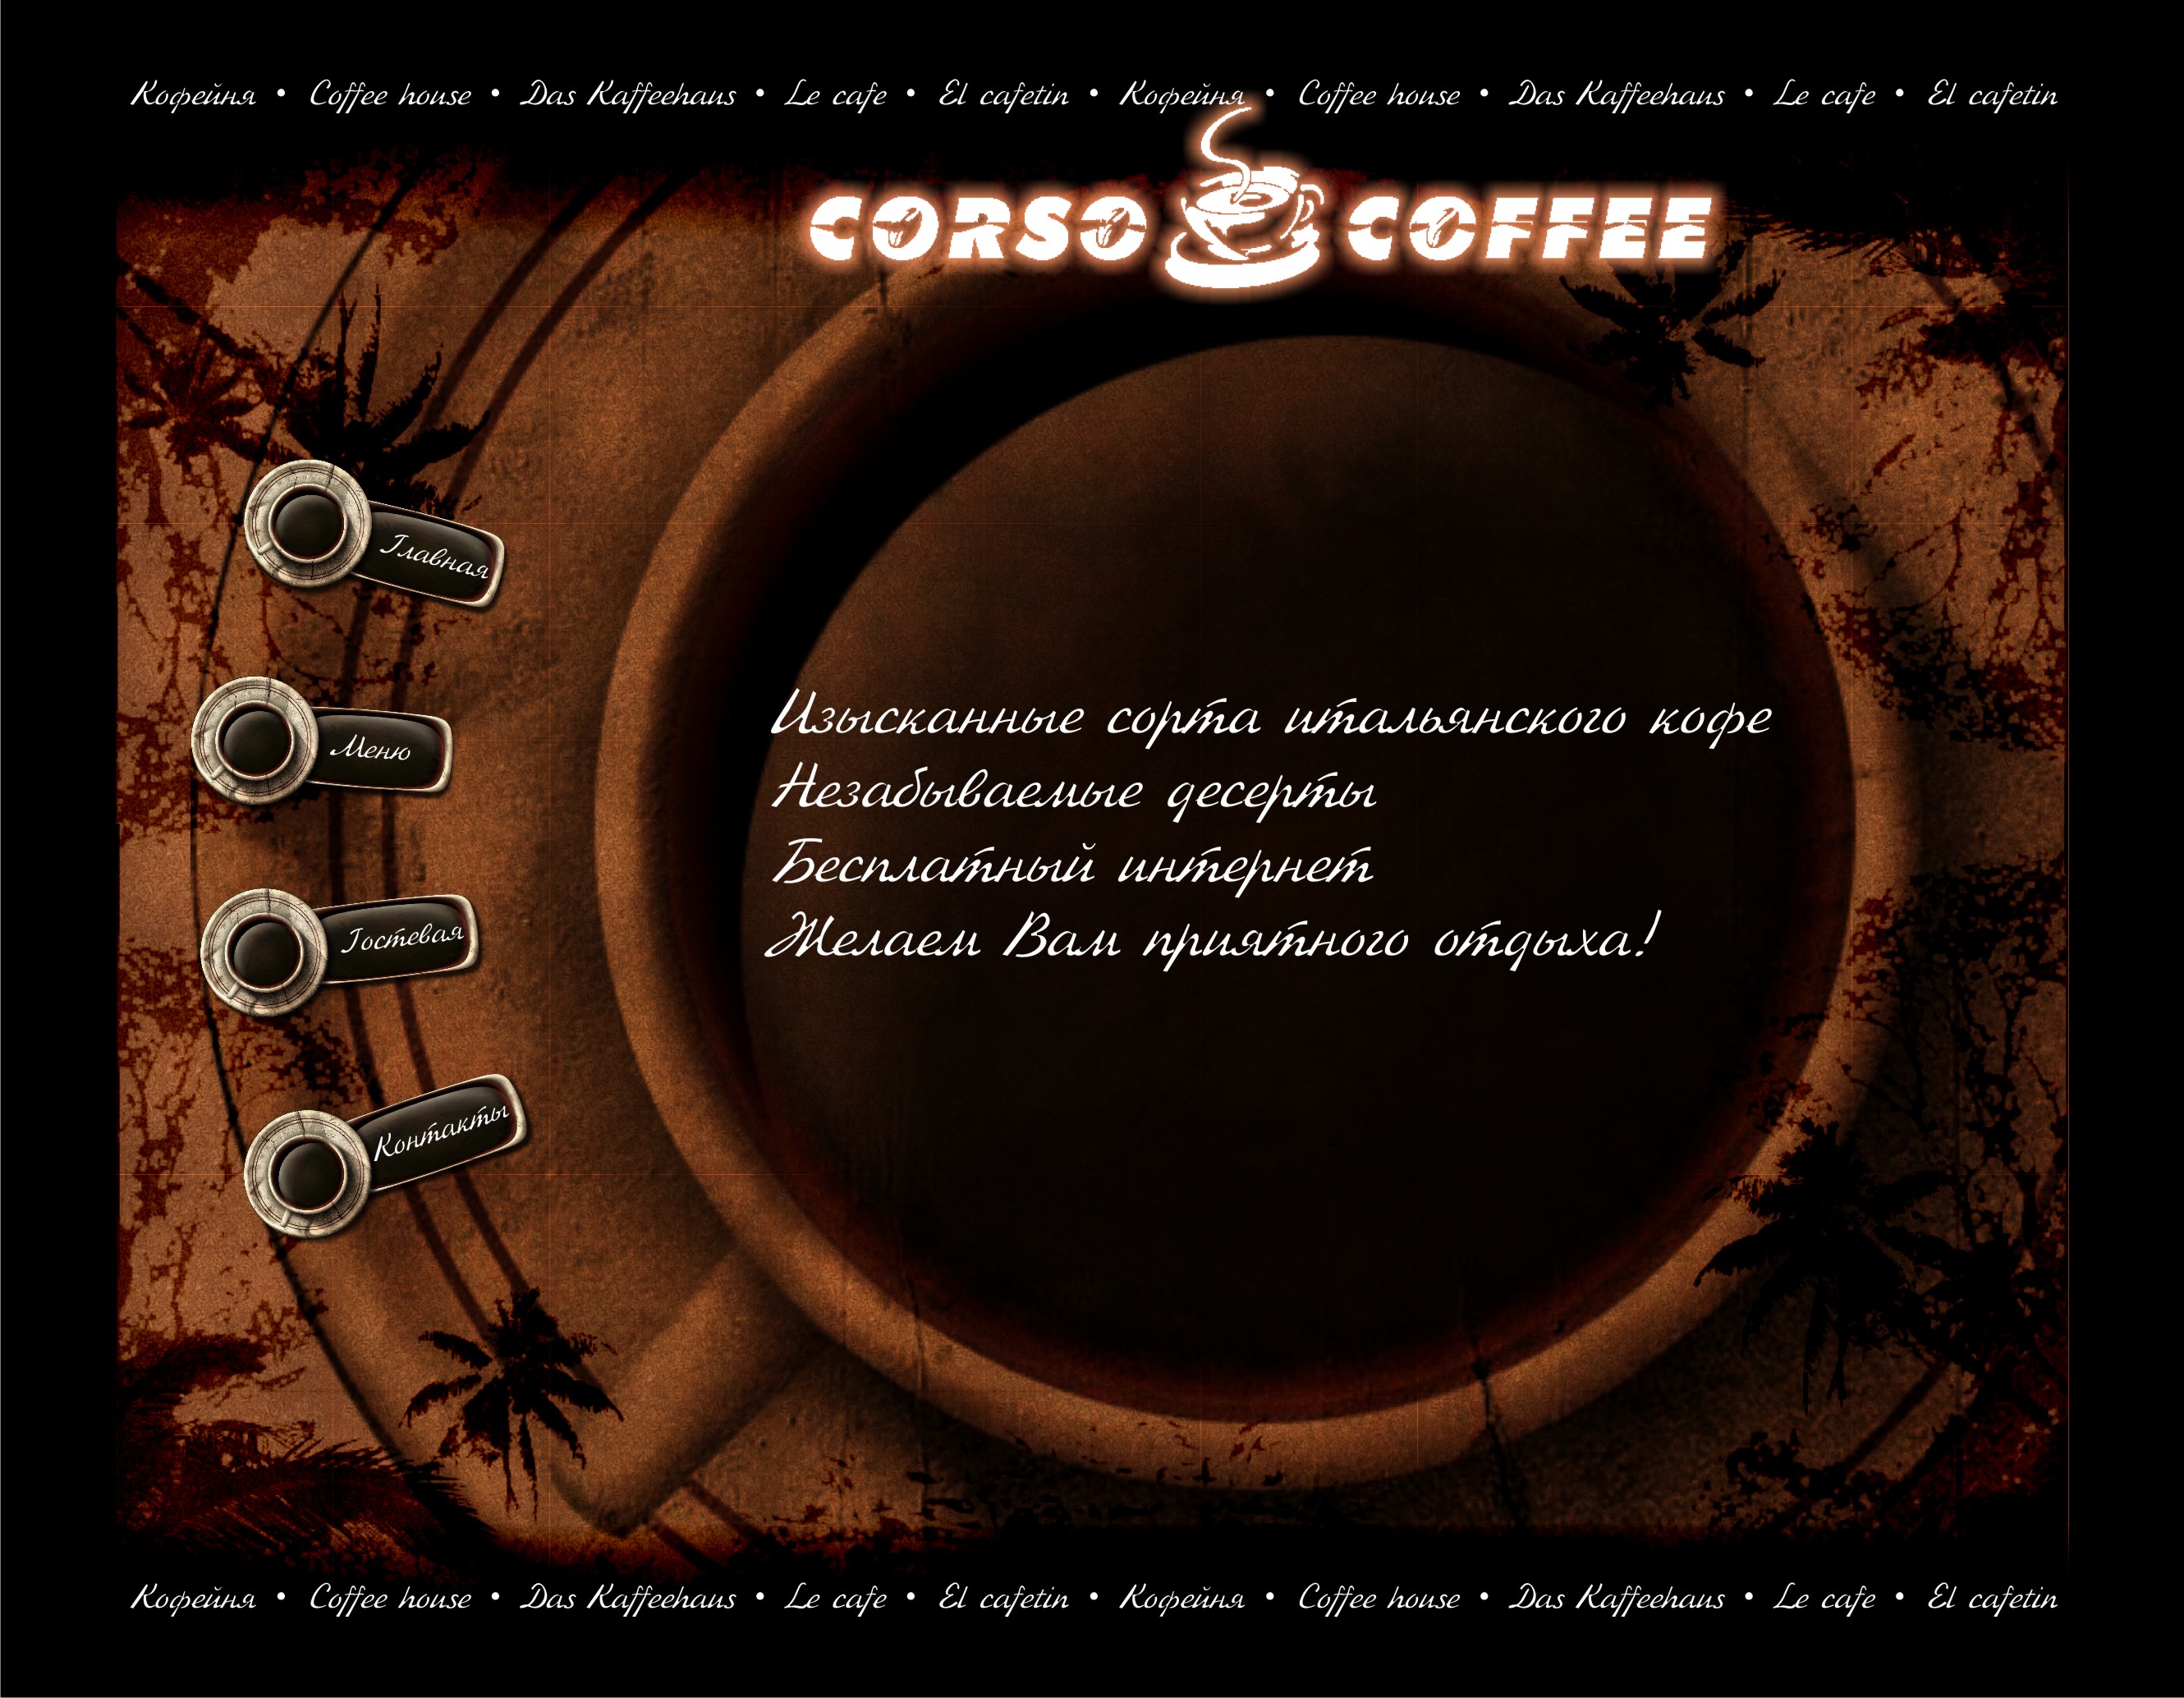 CorsoCoffe дизайн для сайта